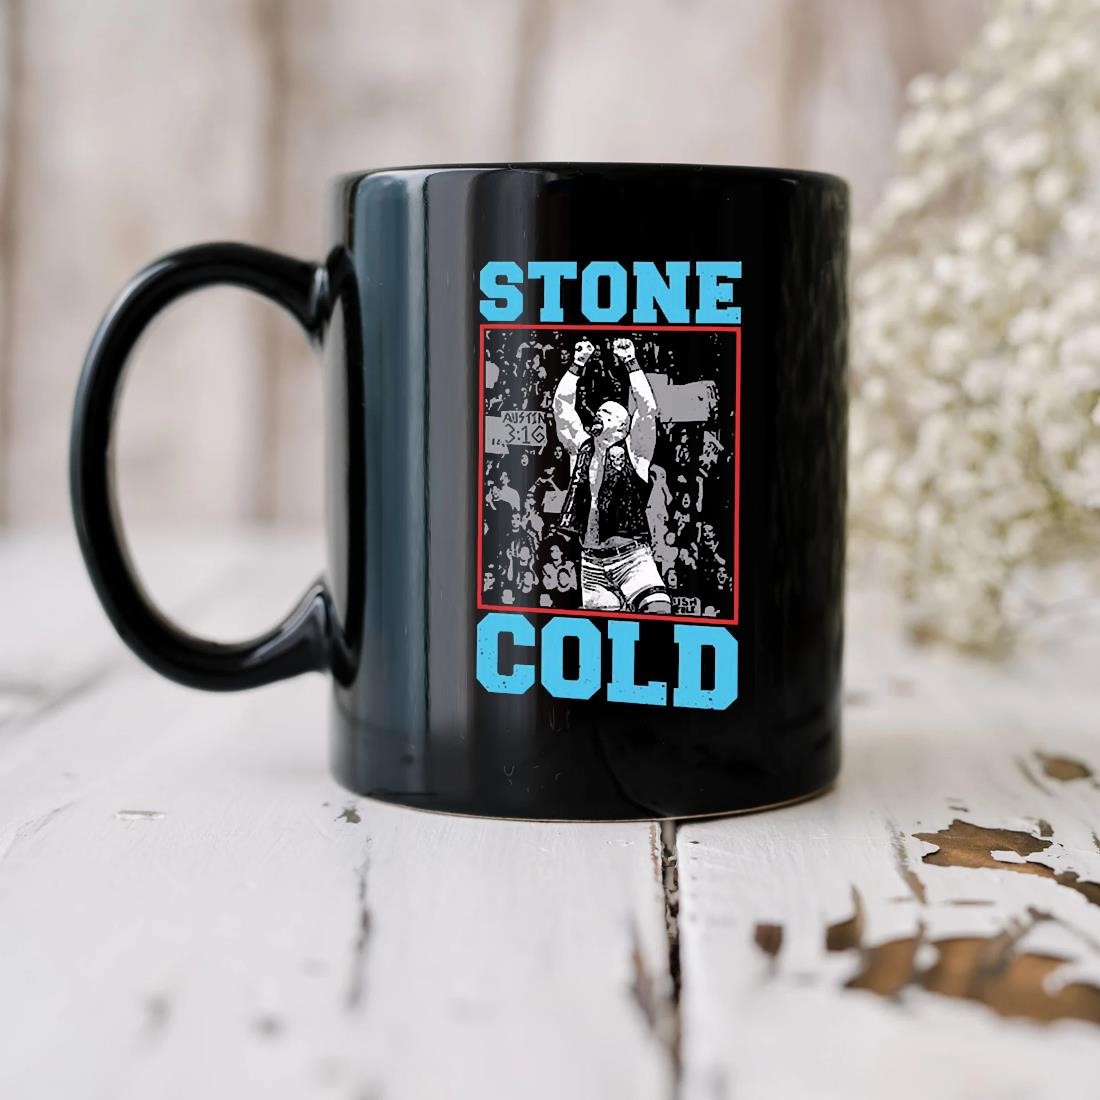 Original Stone Cold Steve Austin Vintage Punk Mug biu.jpg